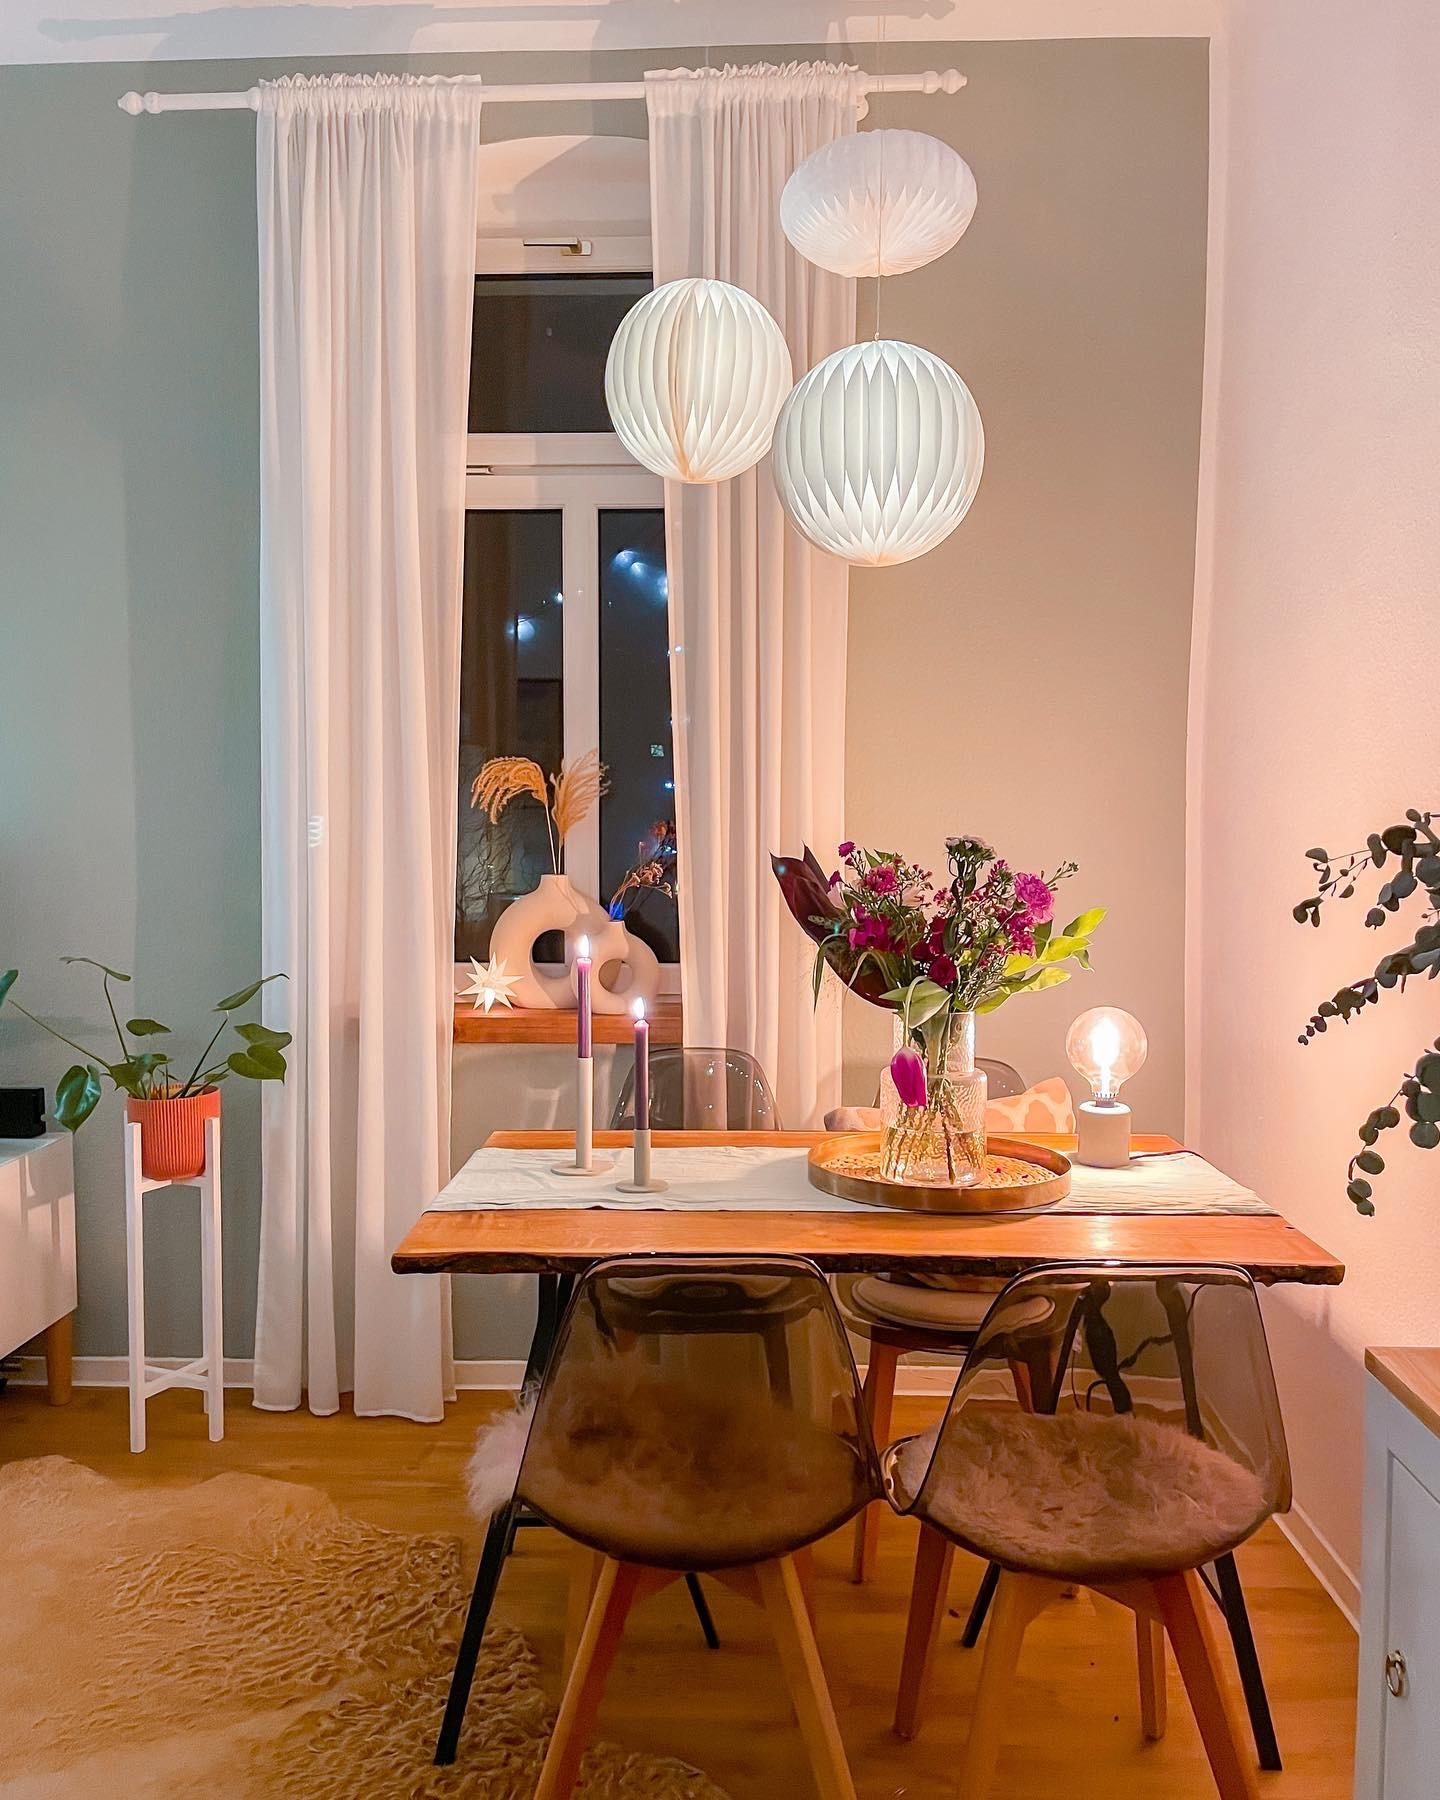 #livingroom #diningtable #table #diytable #cozy #freshflowers